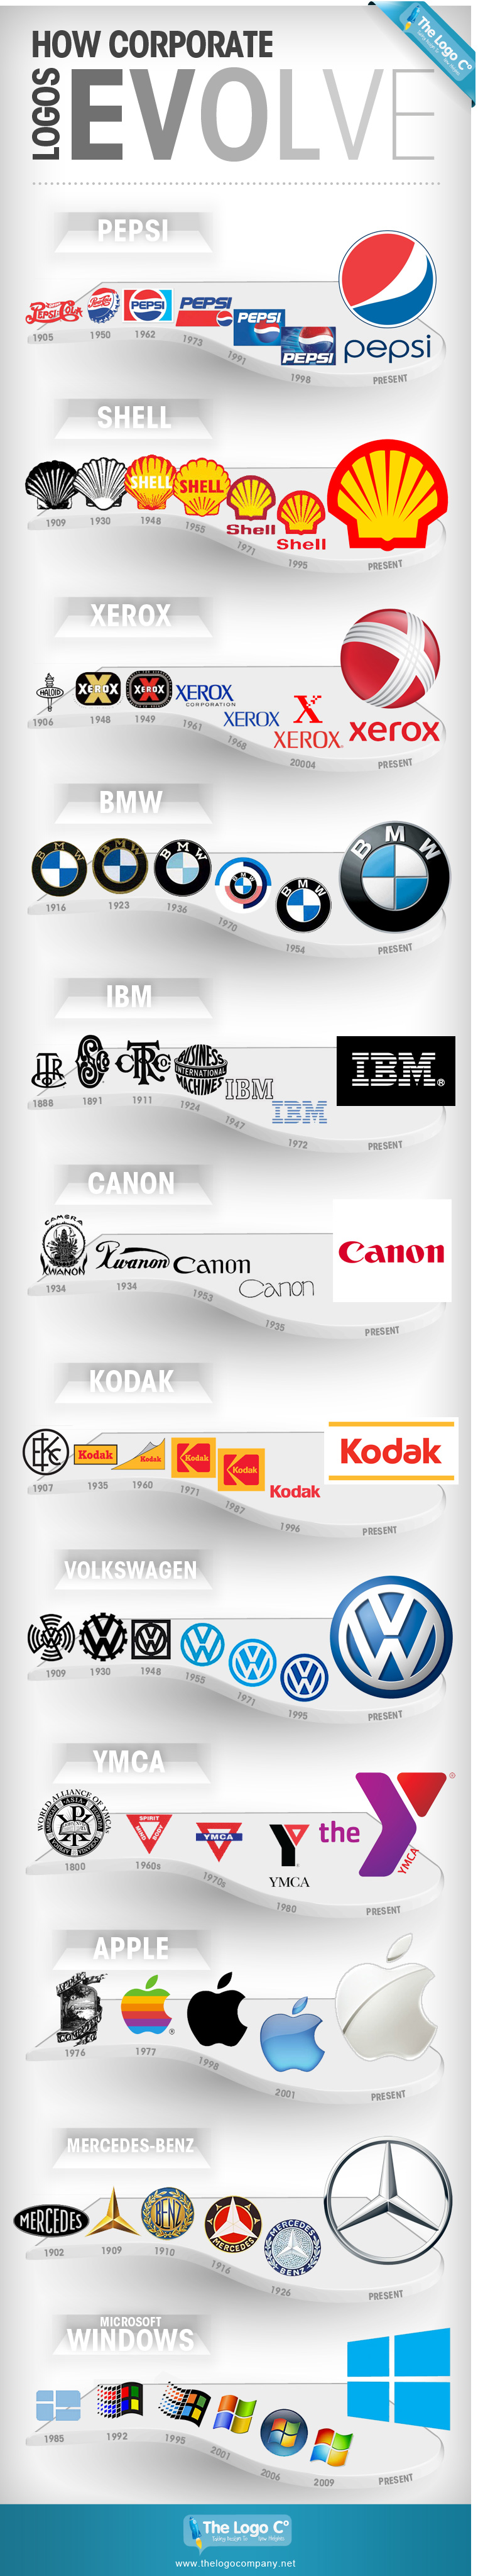 Logos_Evolve-Infographic